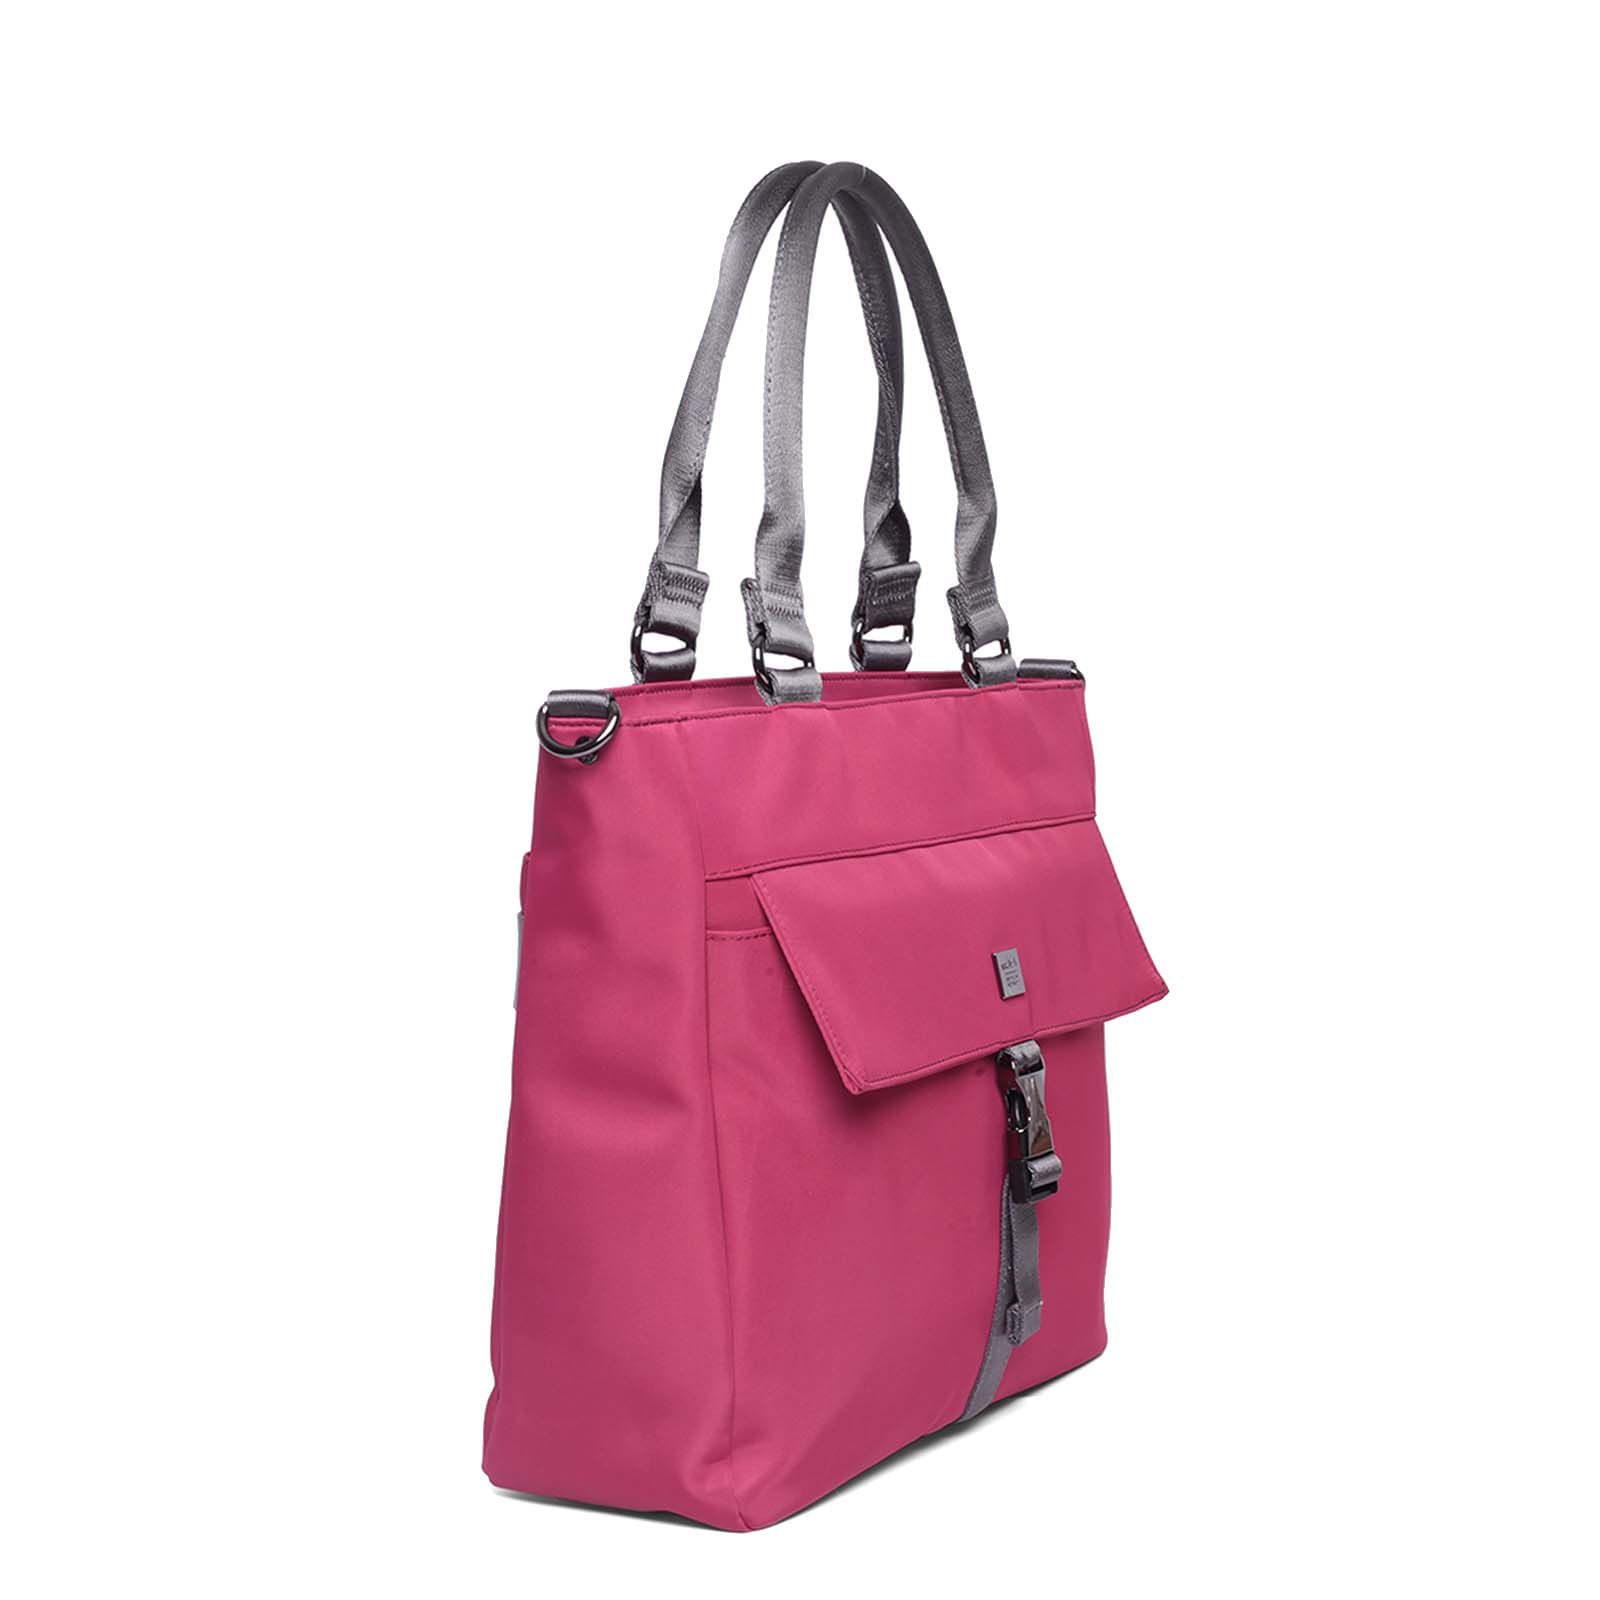 bolsa-shopping-bag-nylon-bnt-61041-i23-unclek-rosa-2